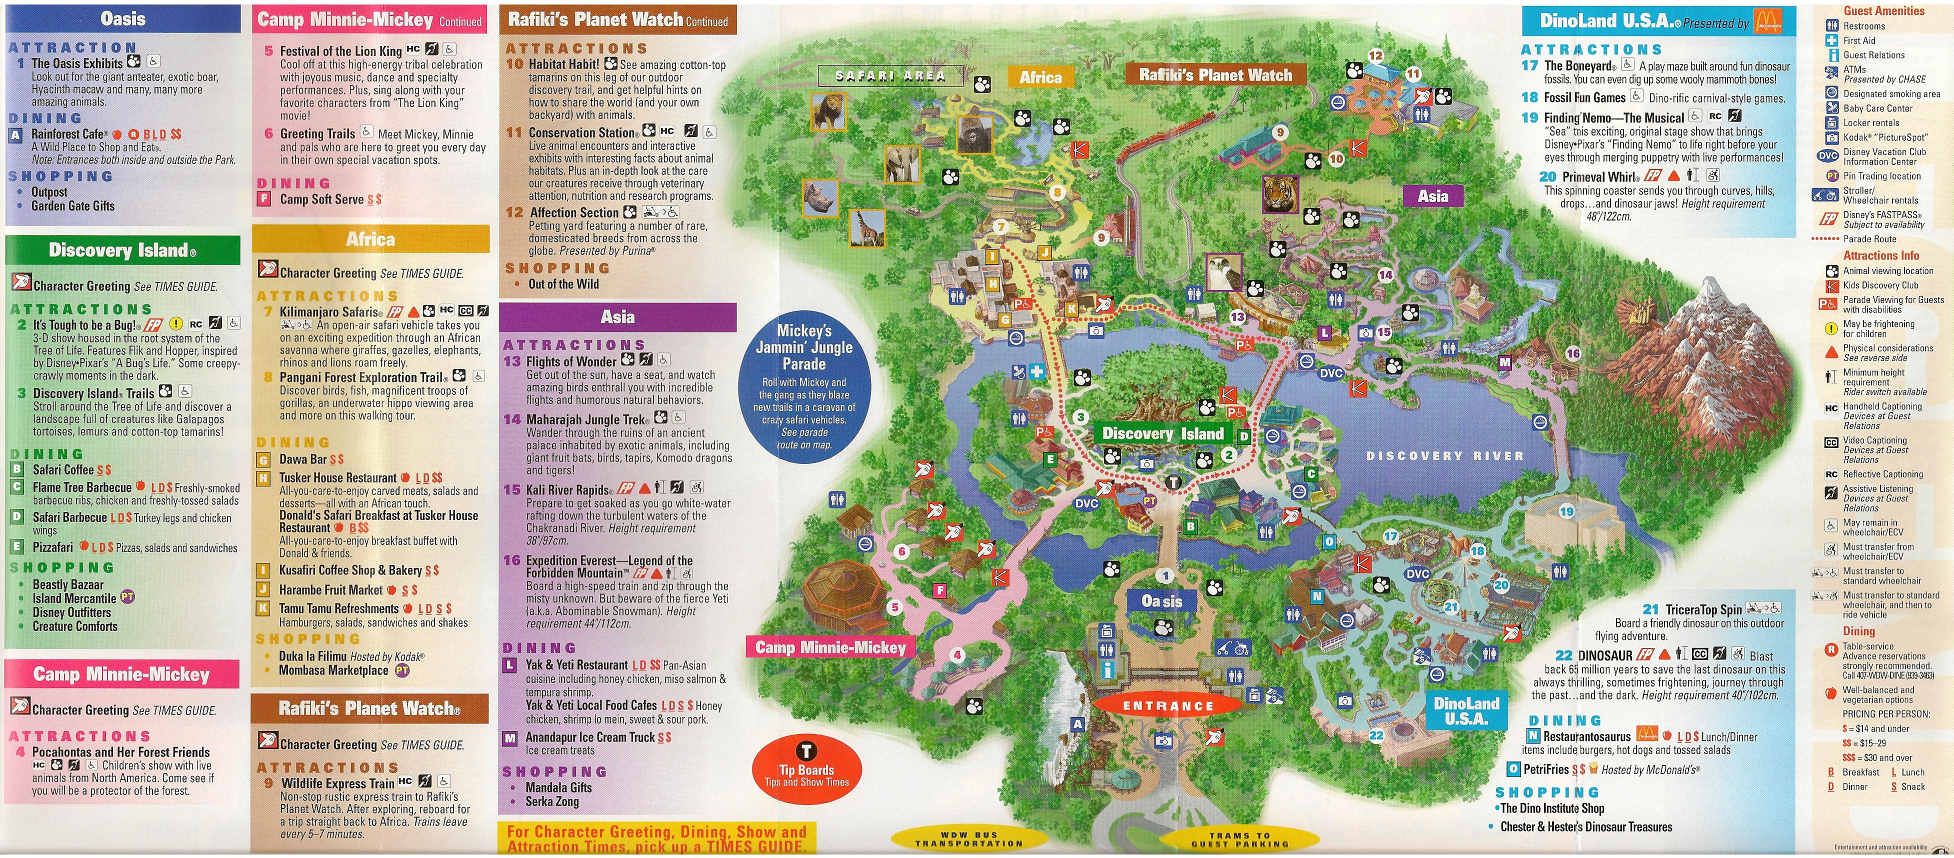 Theme Park Brochures Disney S Discovery Island Theme Park Brochures